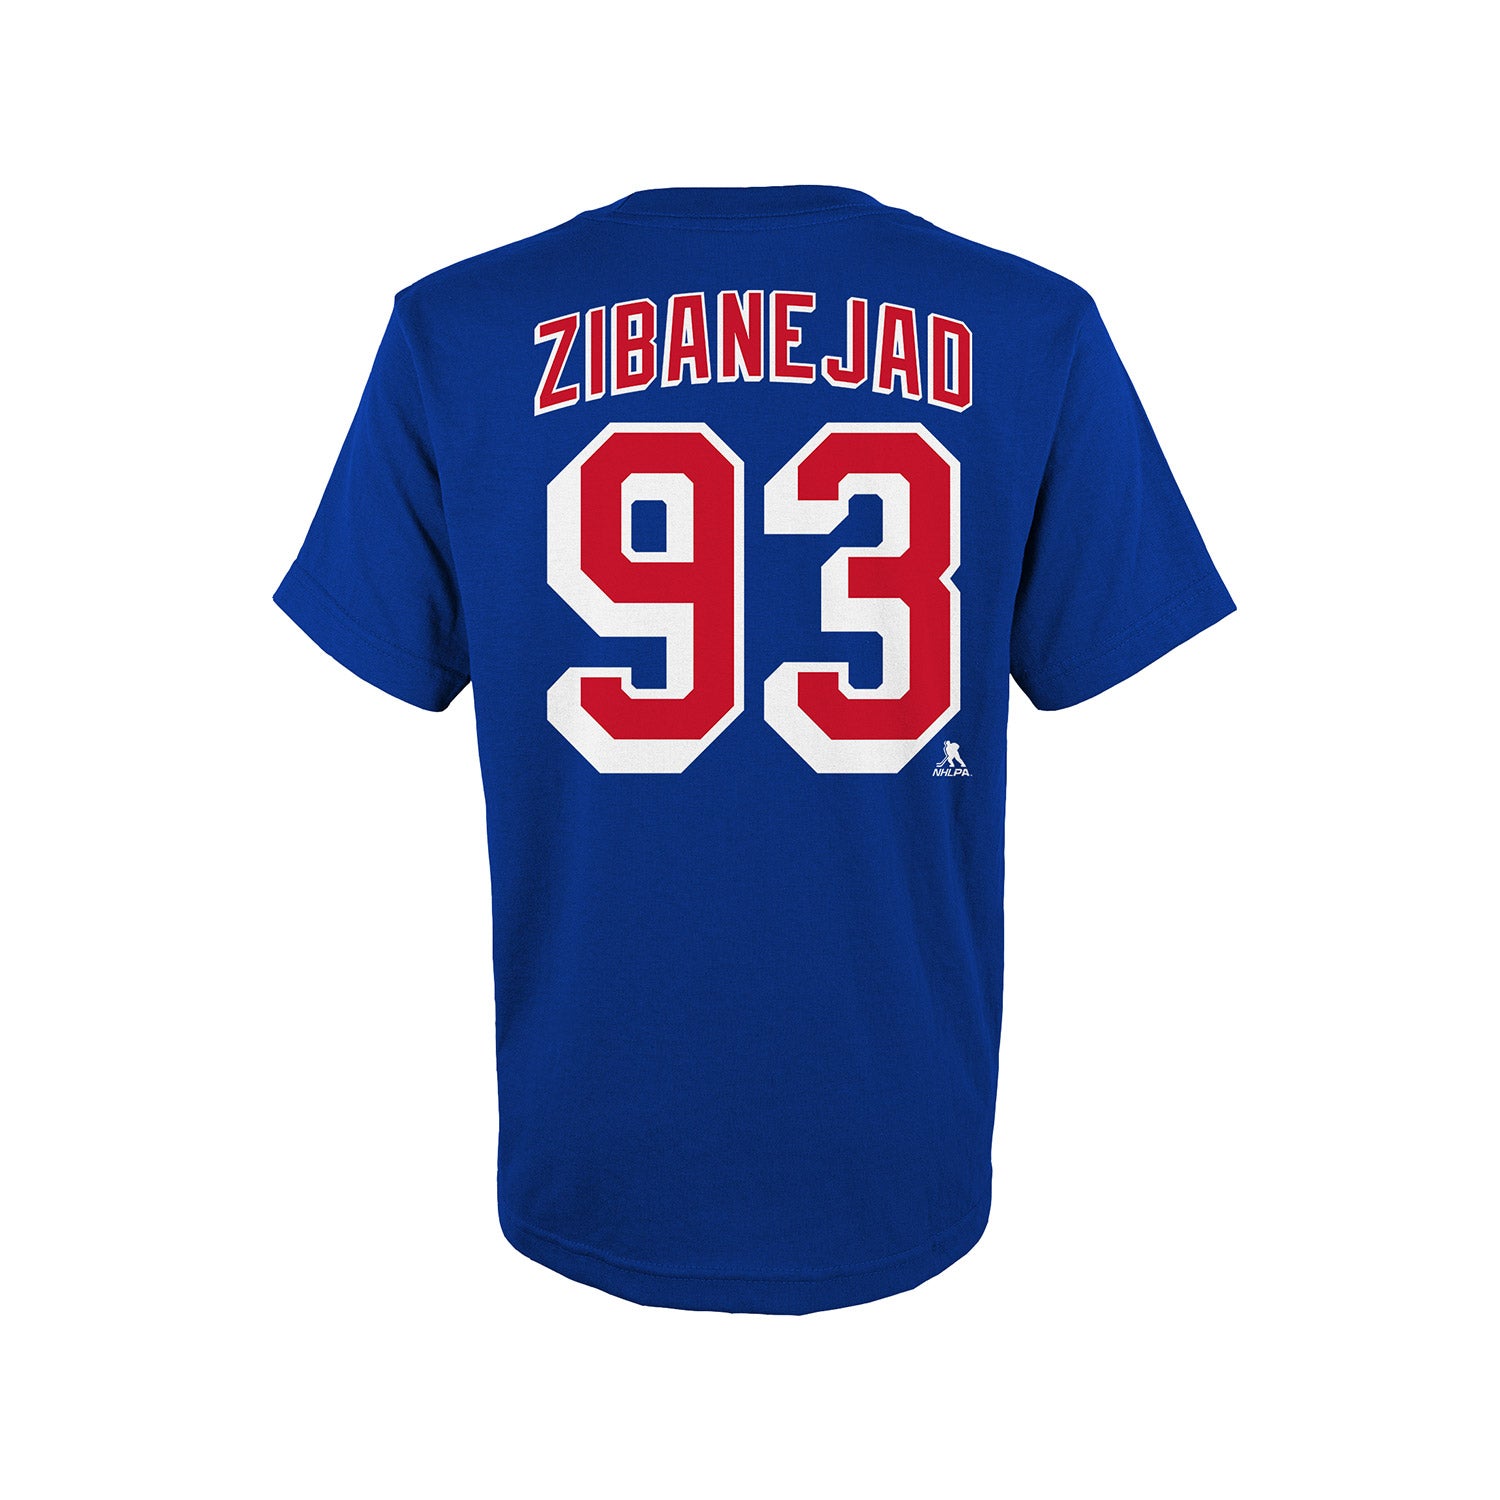 Mika Zibanejad New York Rangers jersey